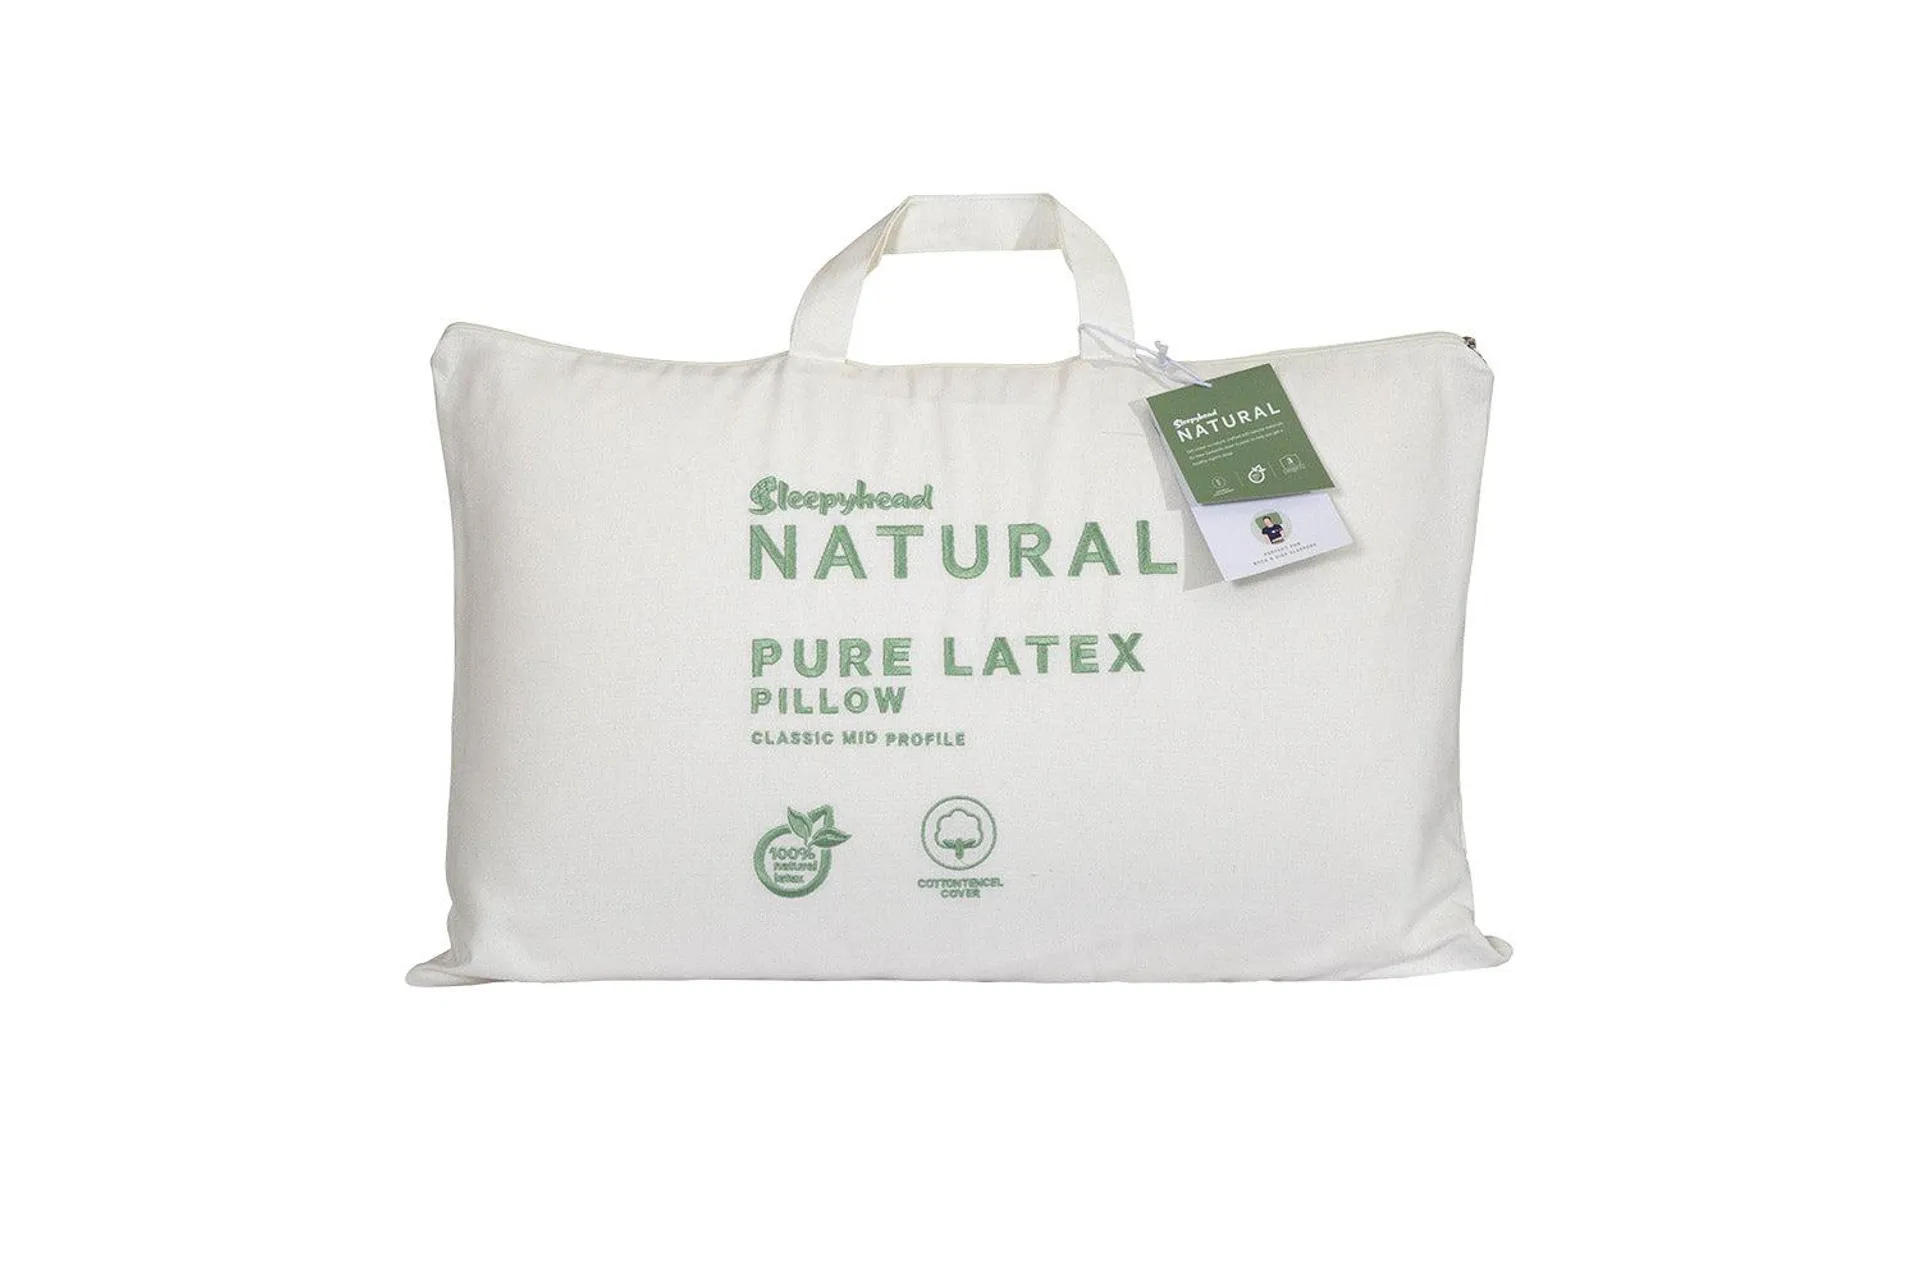 Sleepyhead Natural Pure Latex Classic Mid Profile Pillow